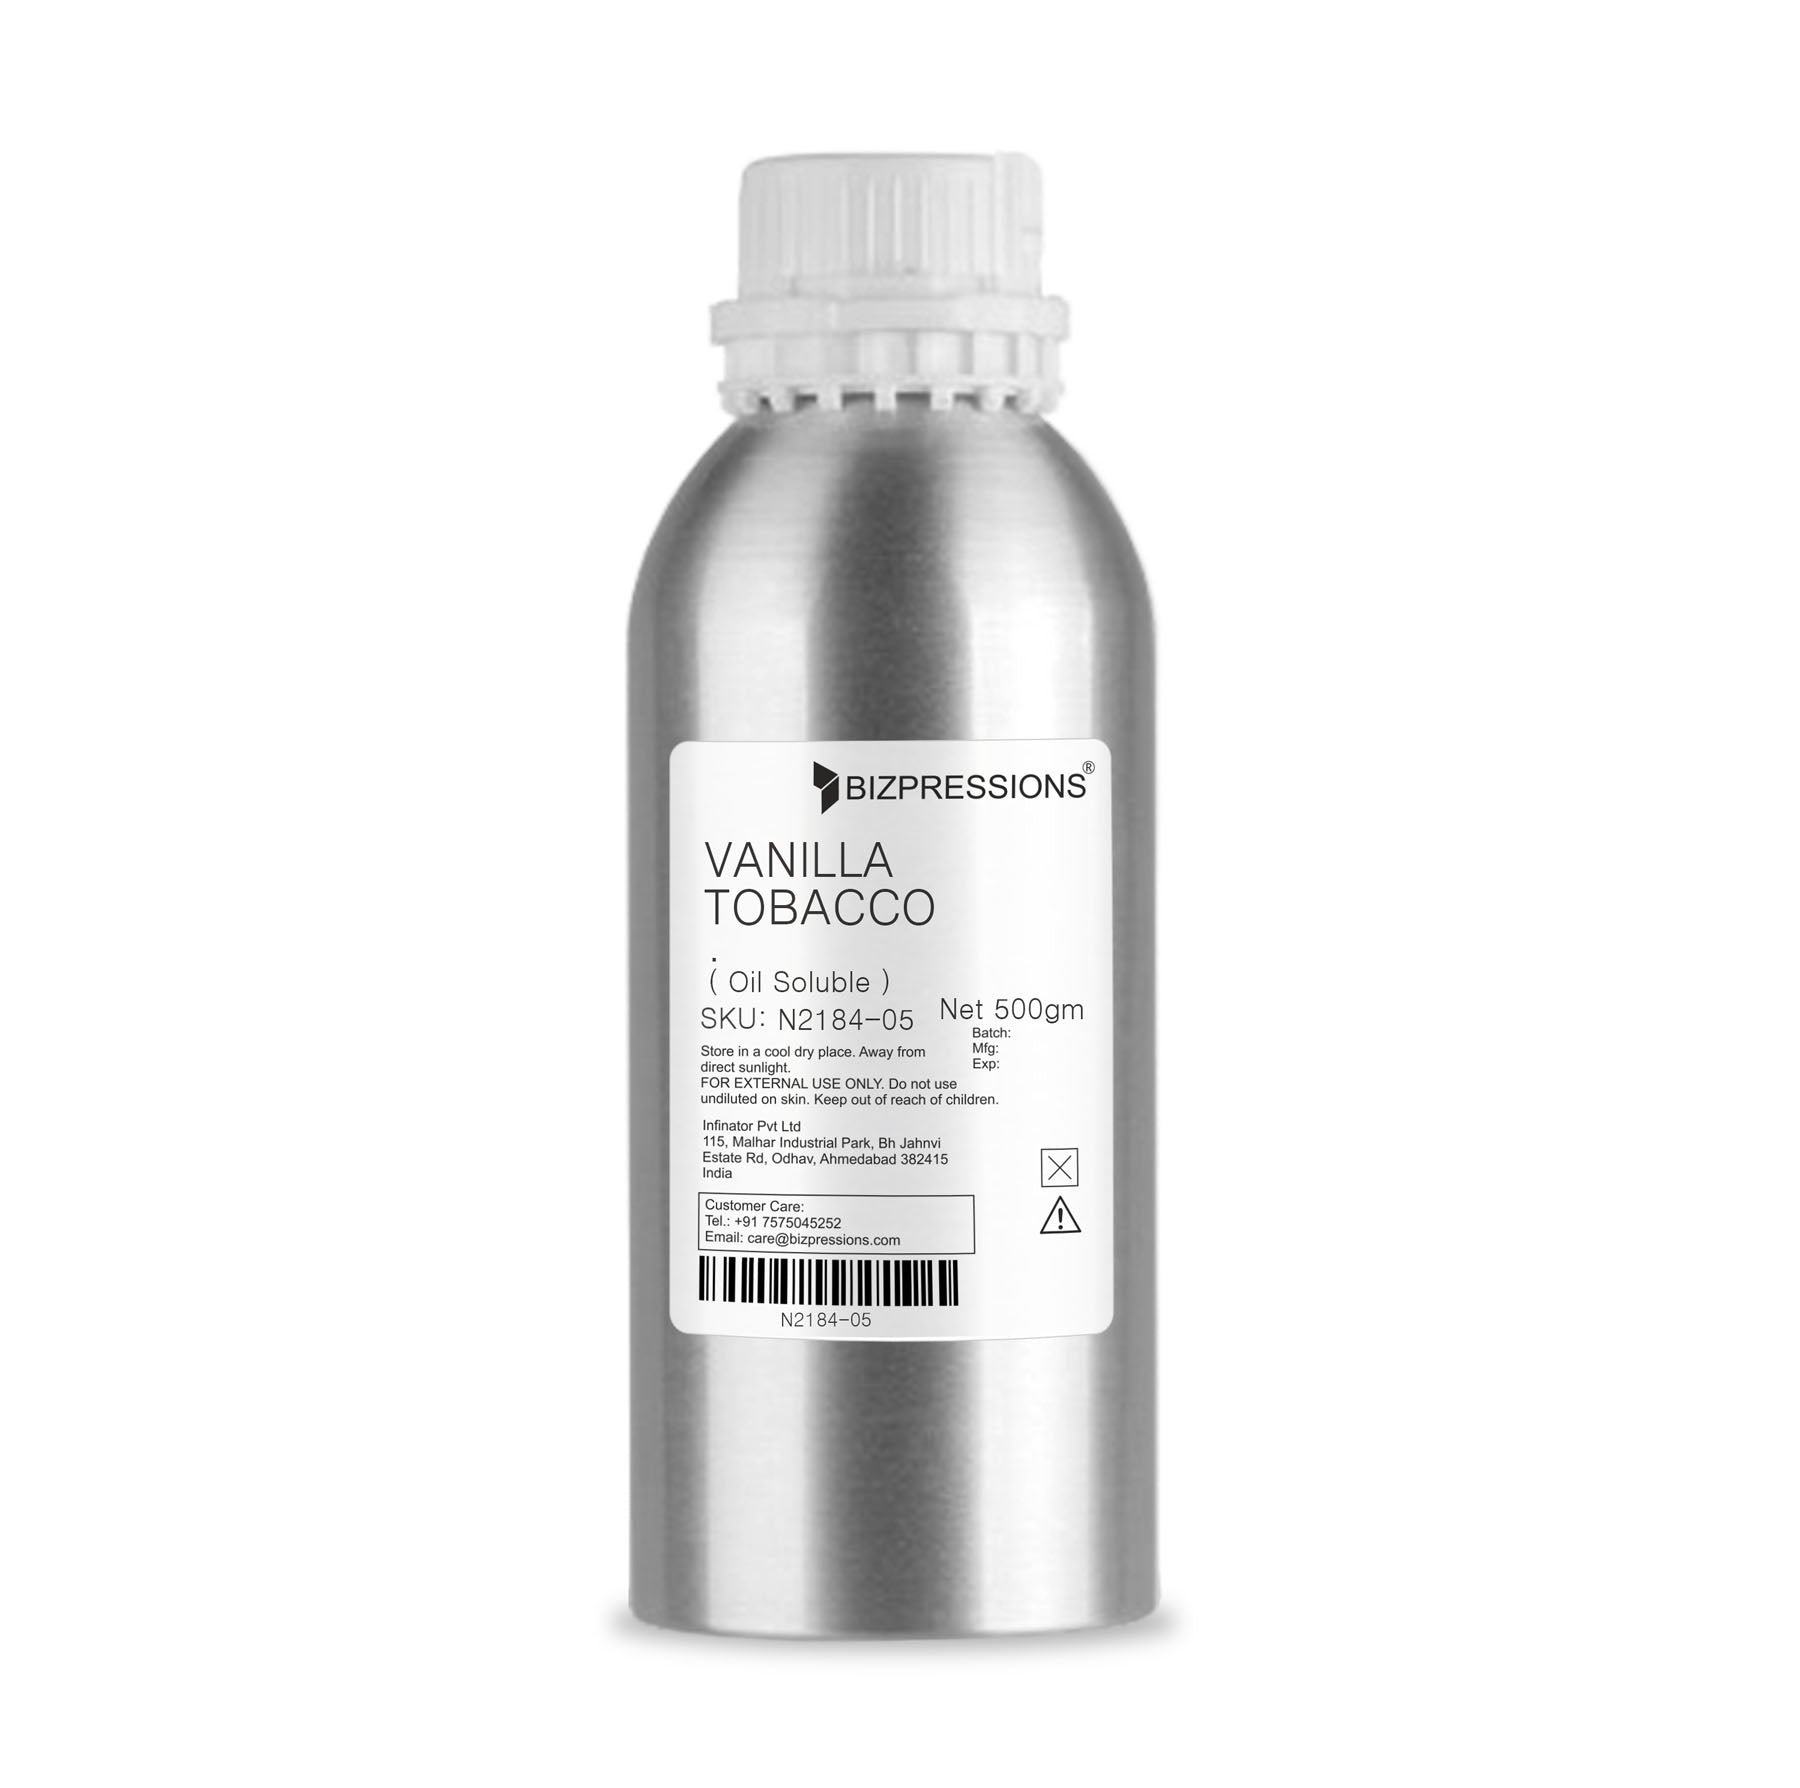 COFFEE VANILLA TOBACCO - Fragrance ( Oil Soluble ) - 500 gm